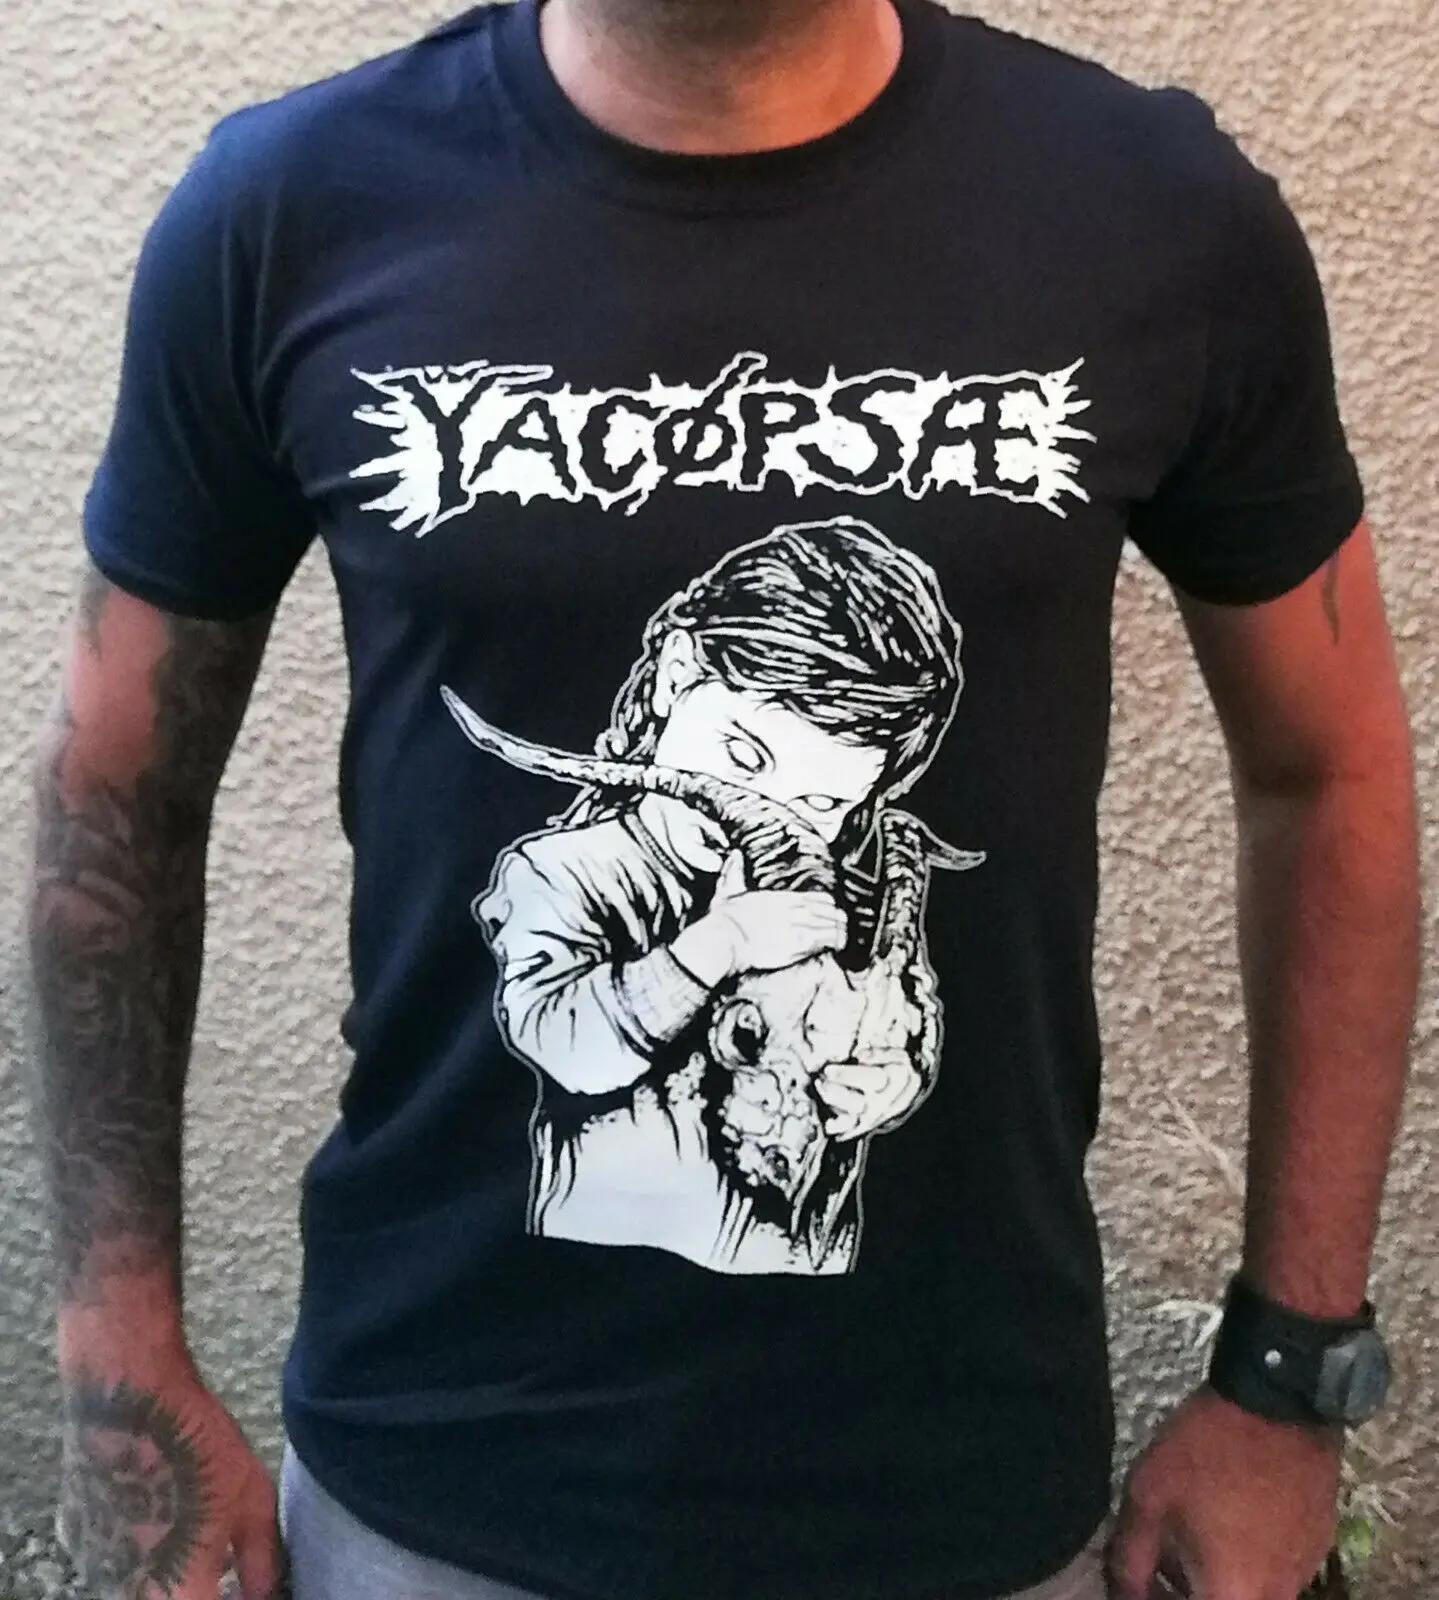 Yacopsae футболка официальная Merch Yac Pse осада инфуст powerс хардкор панк | Мужская одежда